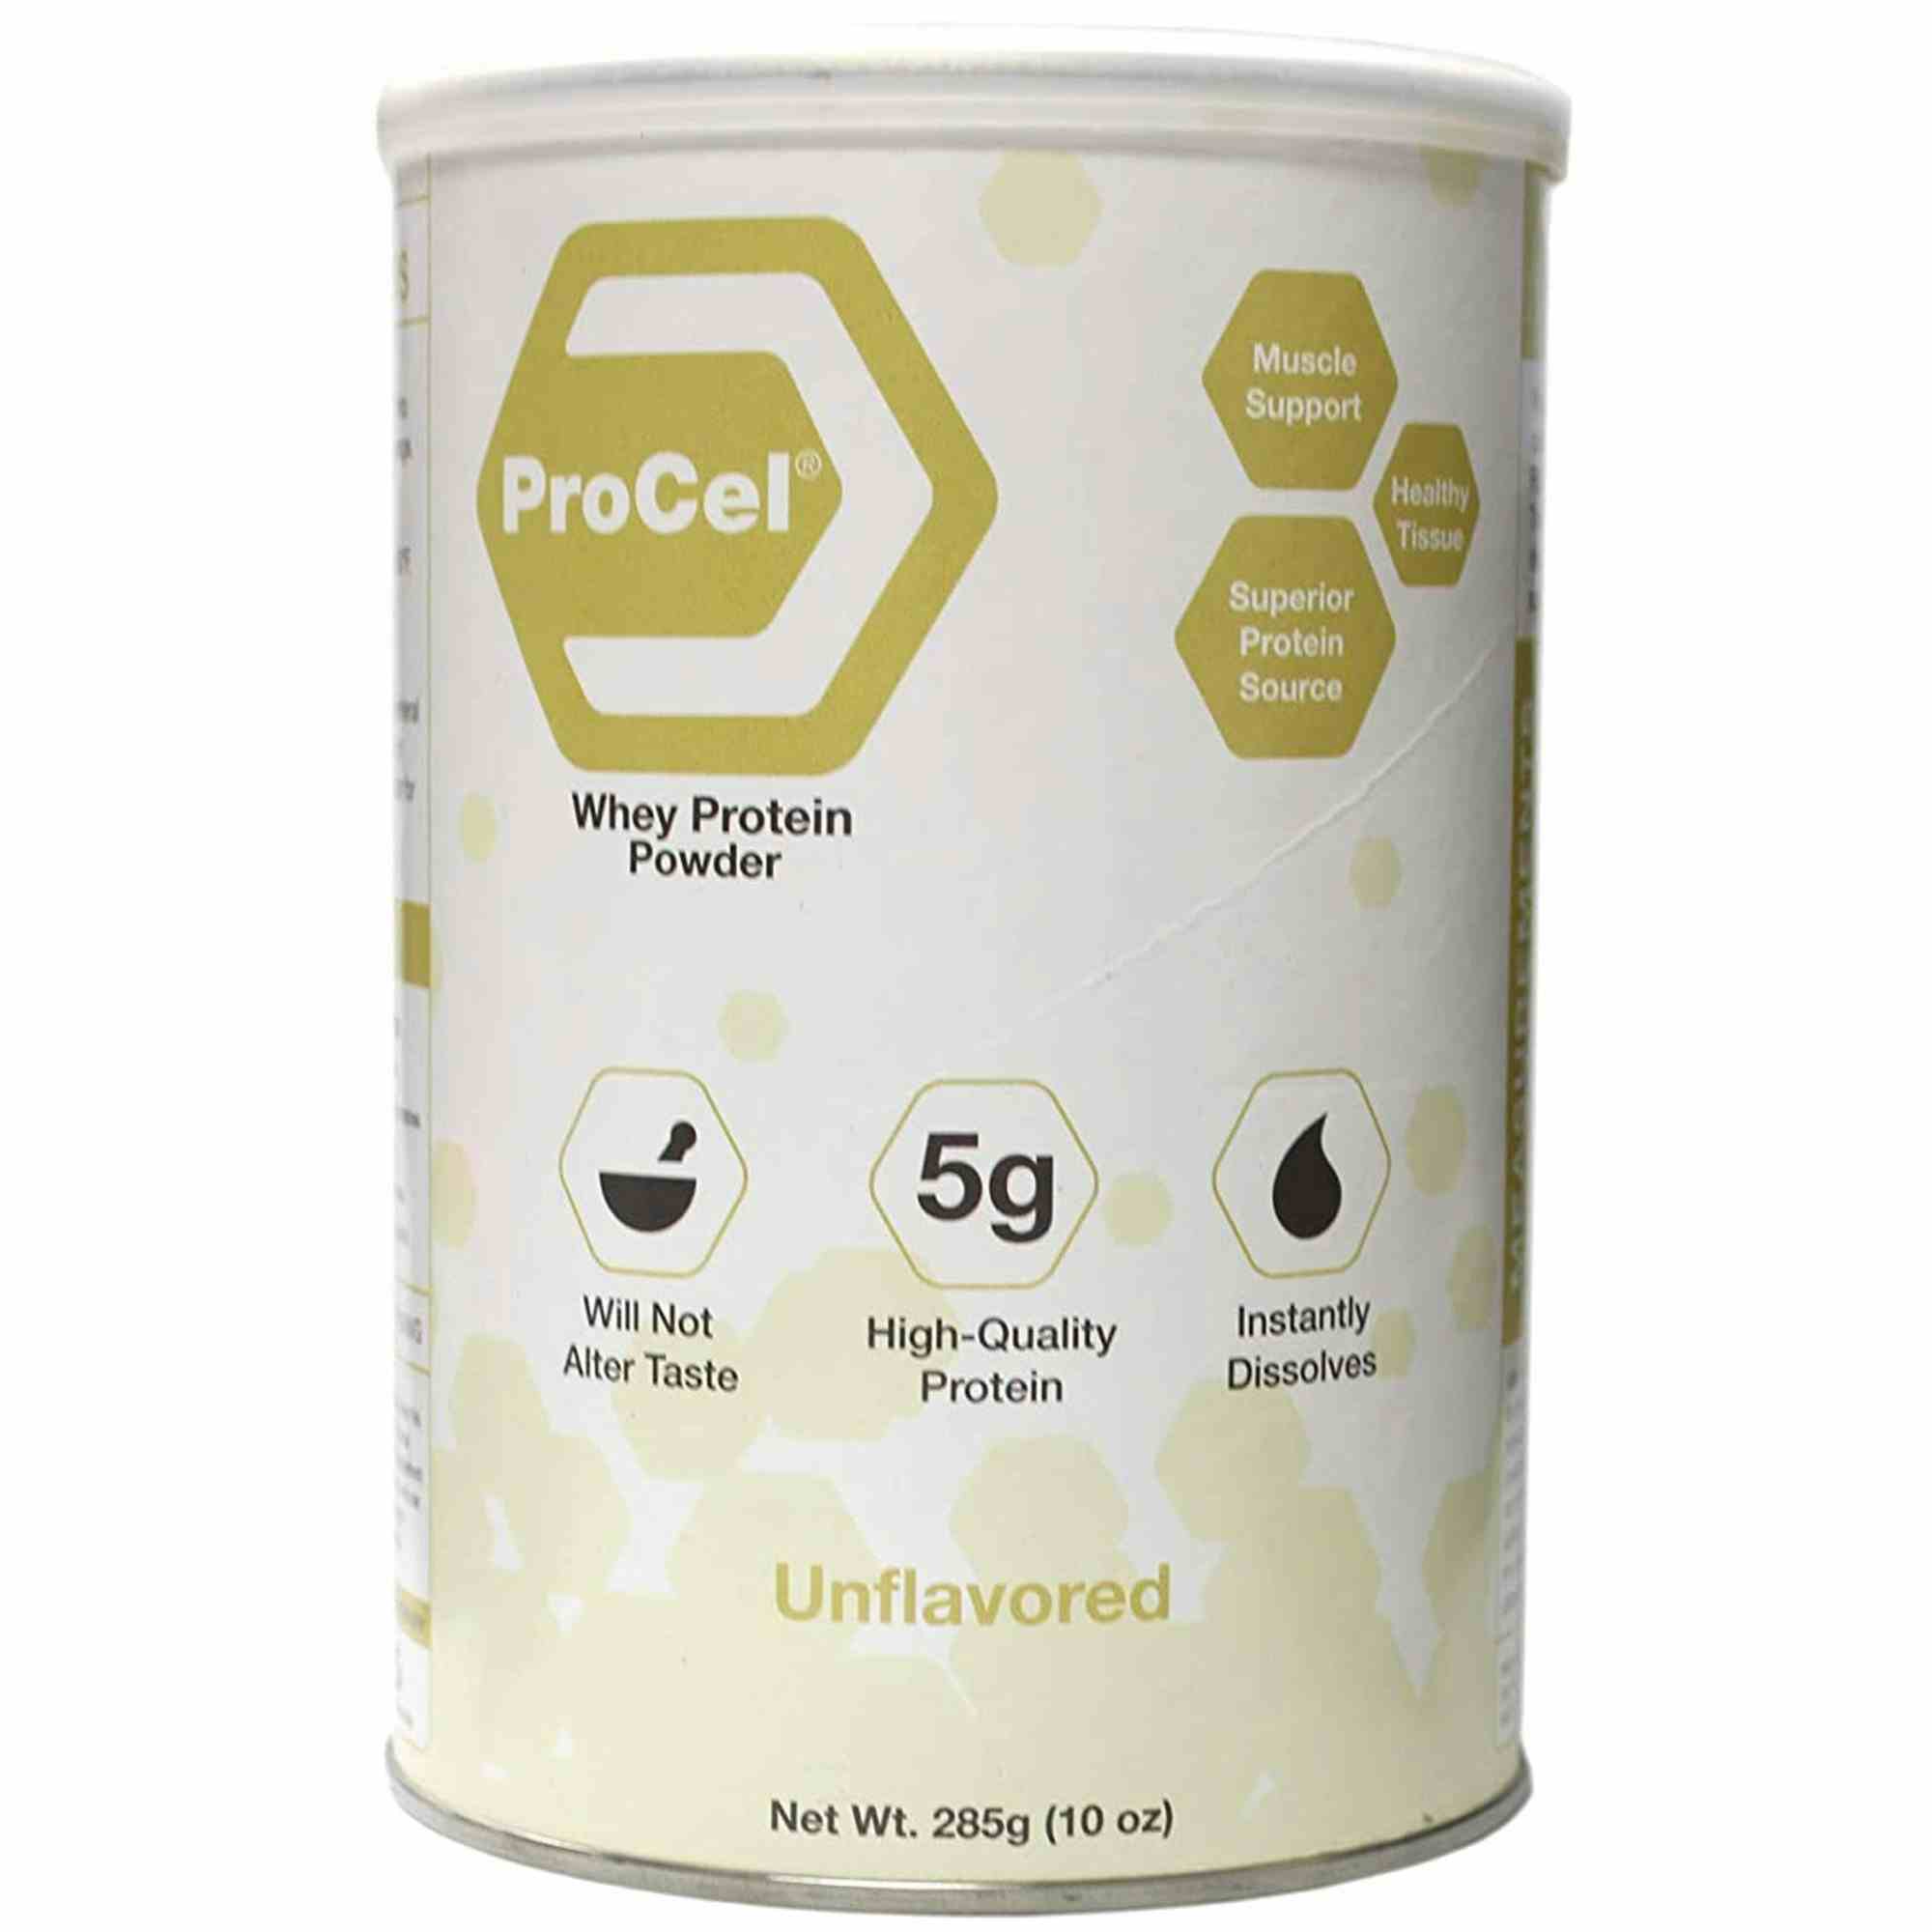 ProCel Whey Protein Supplement Powder, Unflavored, 10 oz., GH80, 1 Each